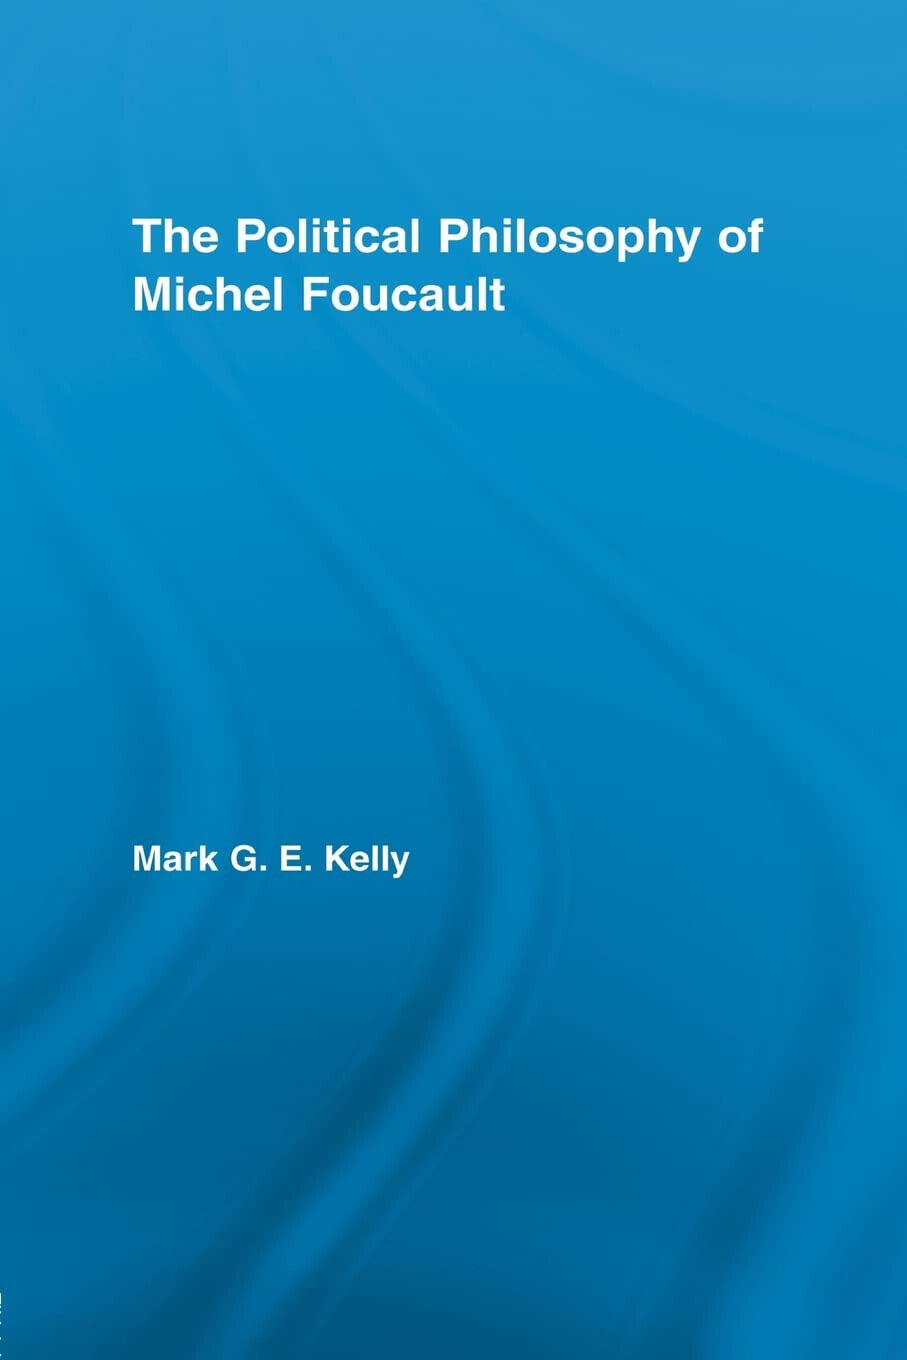 The Political Philosophy of Michel Foucault - Mark G. E. Kelly - Routledge, 2012